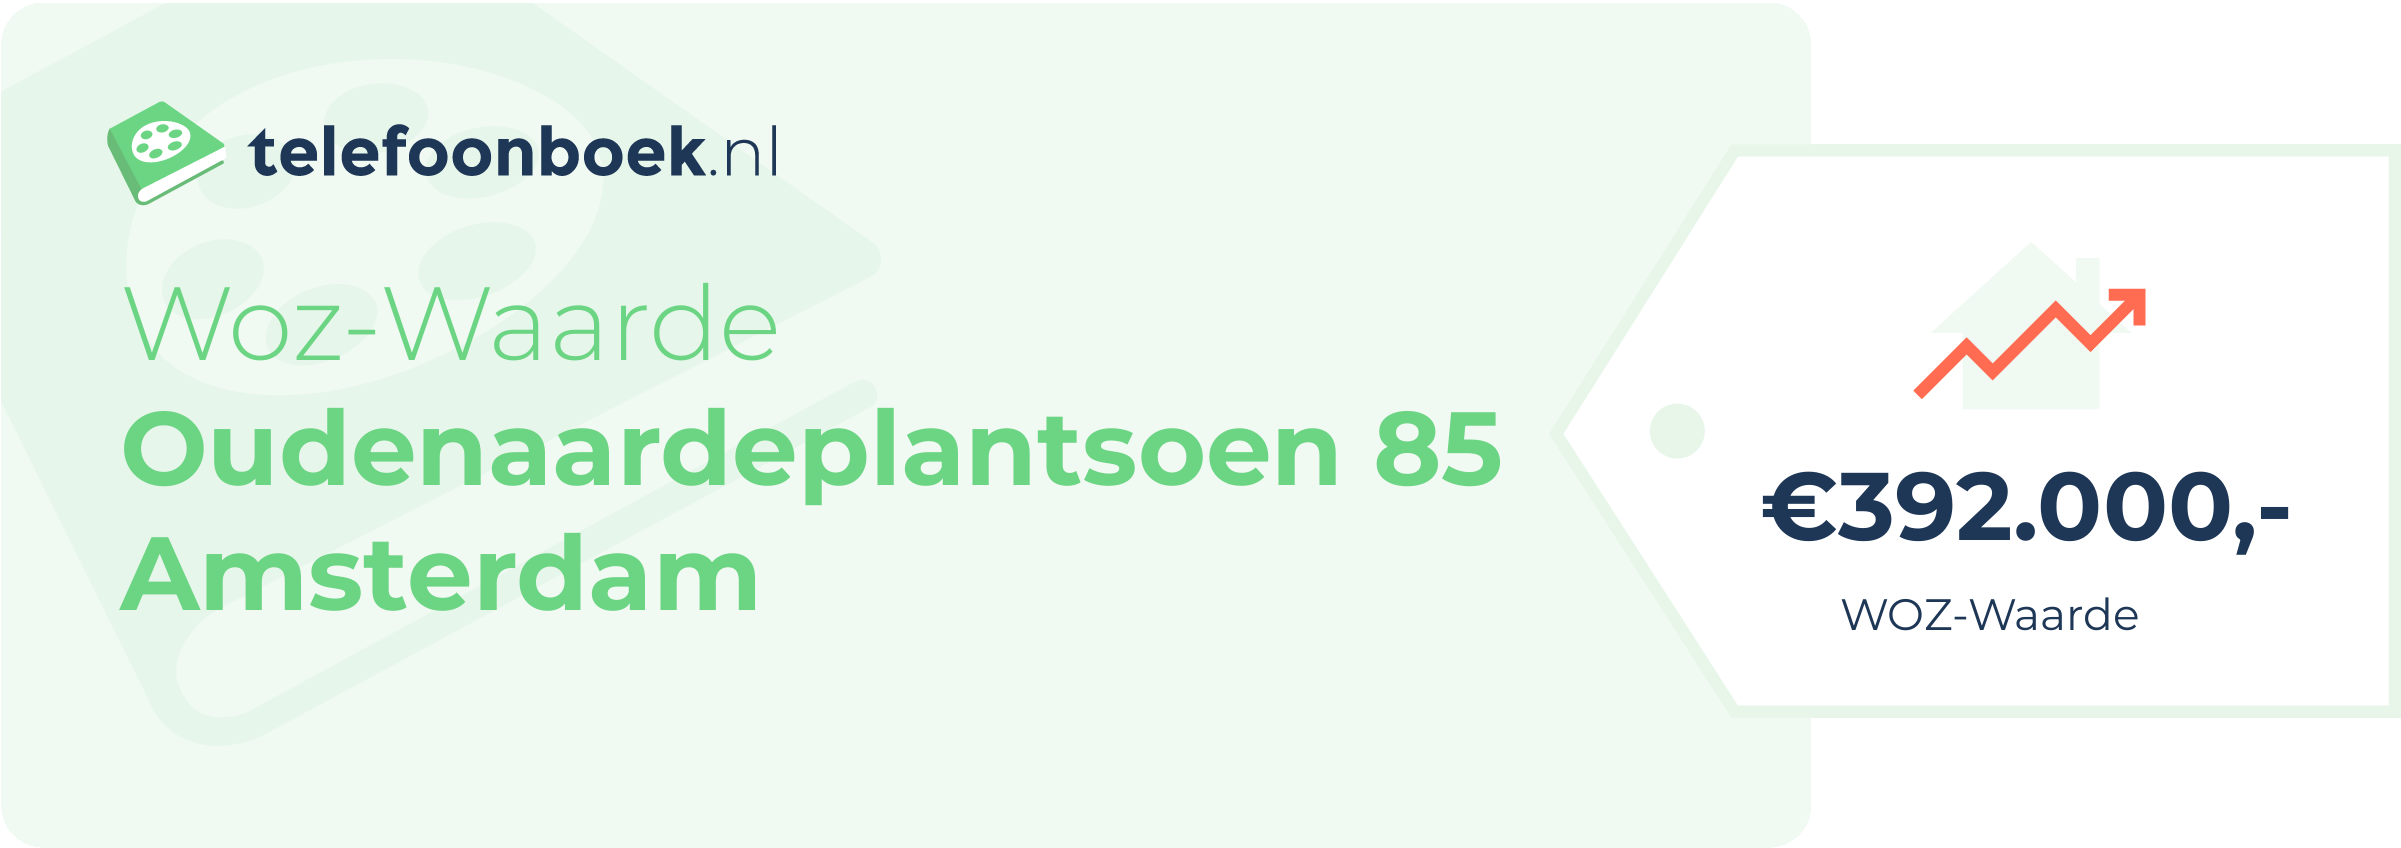 WOZ-waarde Oudenaardeplantsoen 85 Amsterdam